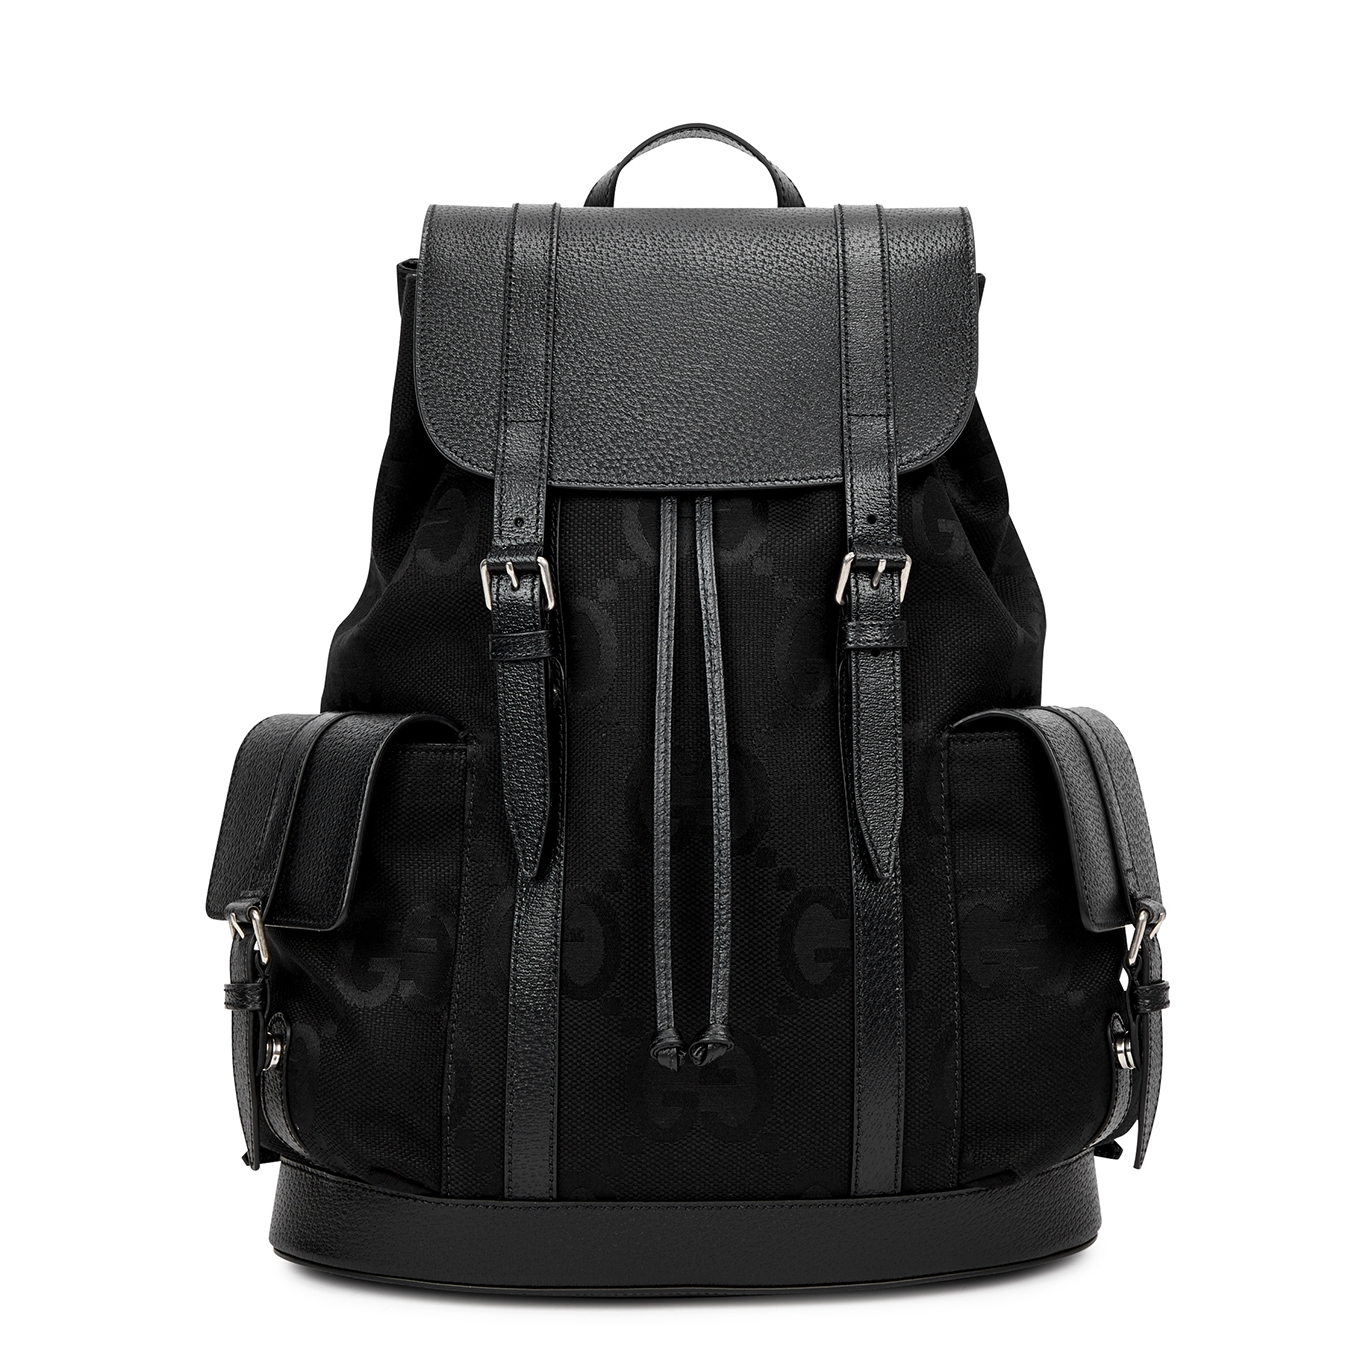 Jumbo GG backpack in black GG canvas